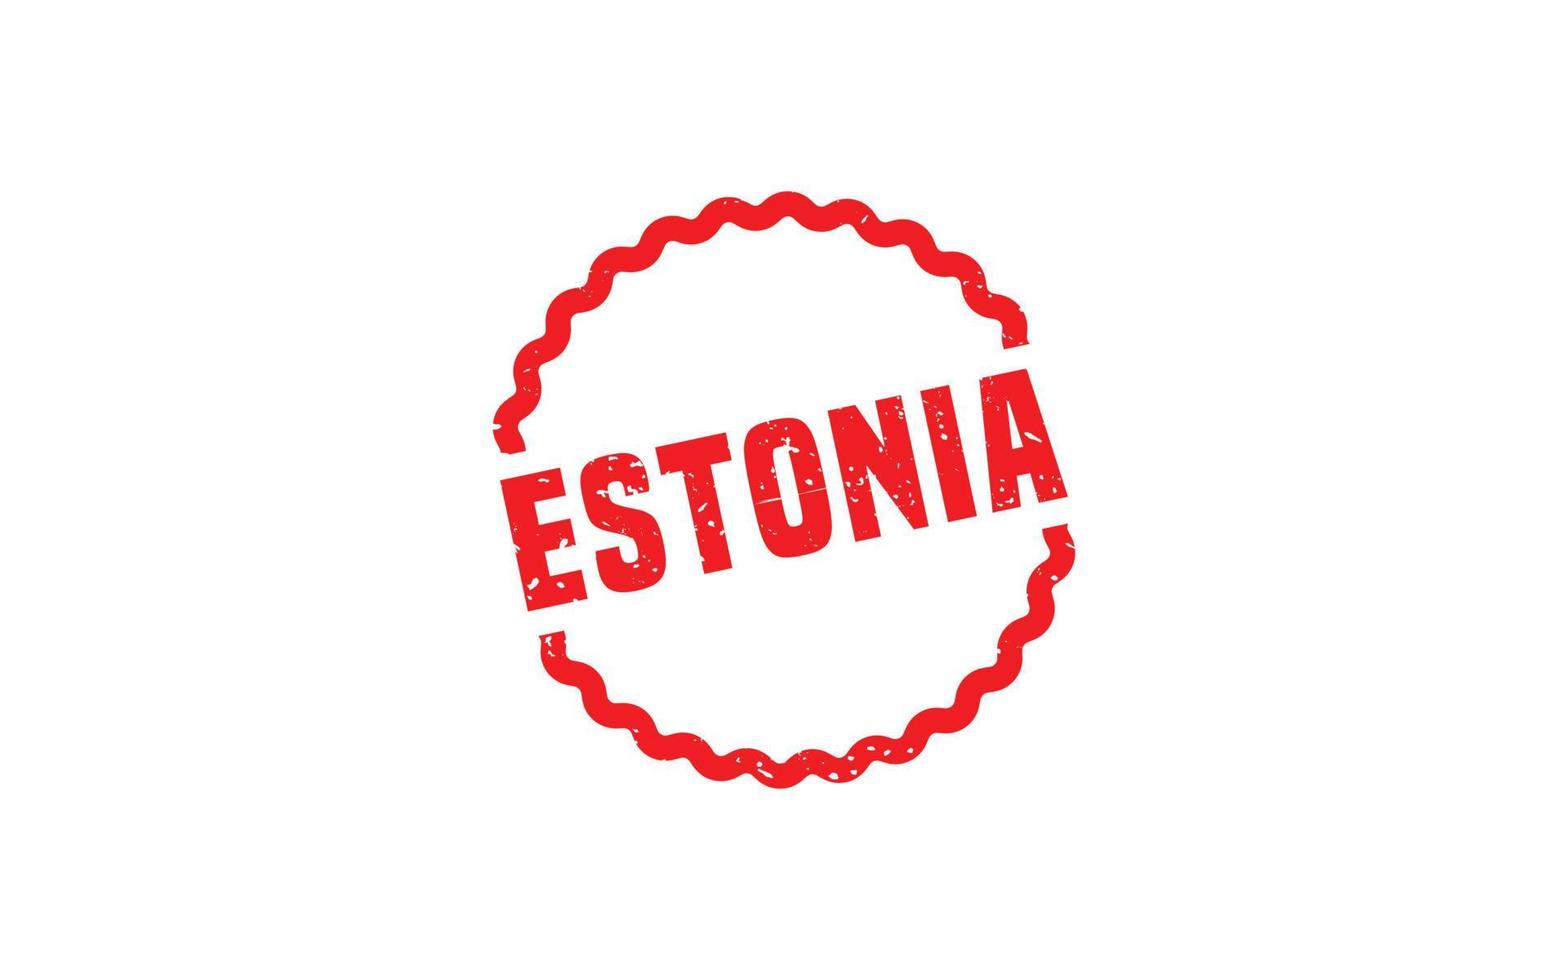 borracha de carimbo da estônia com estilo grunge em fundo branco vetor